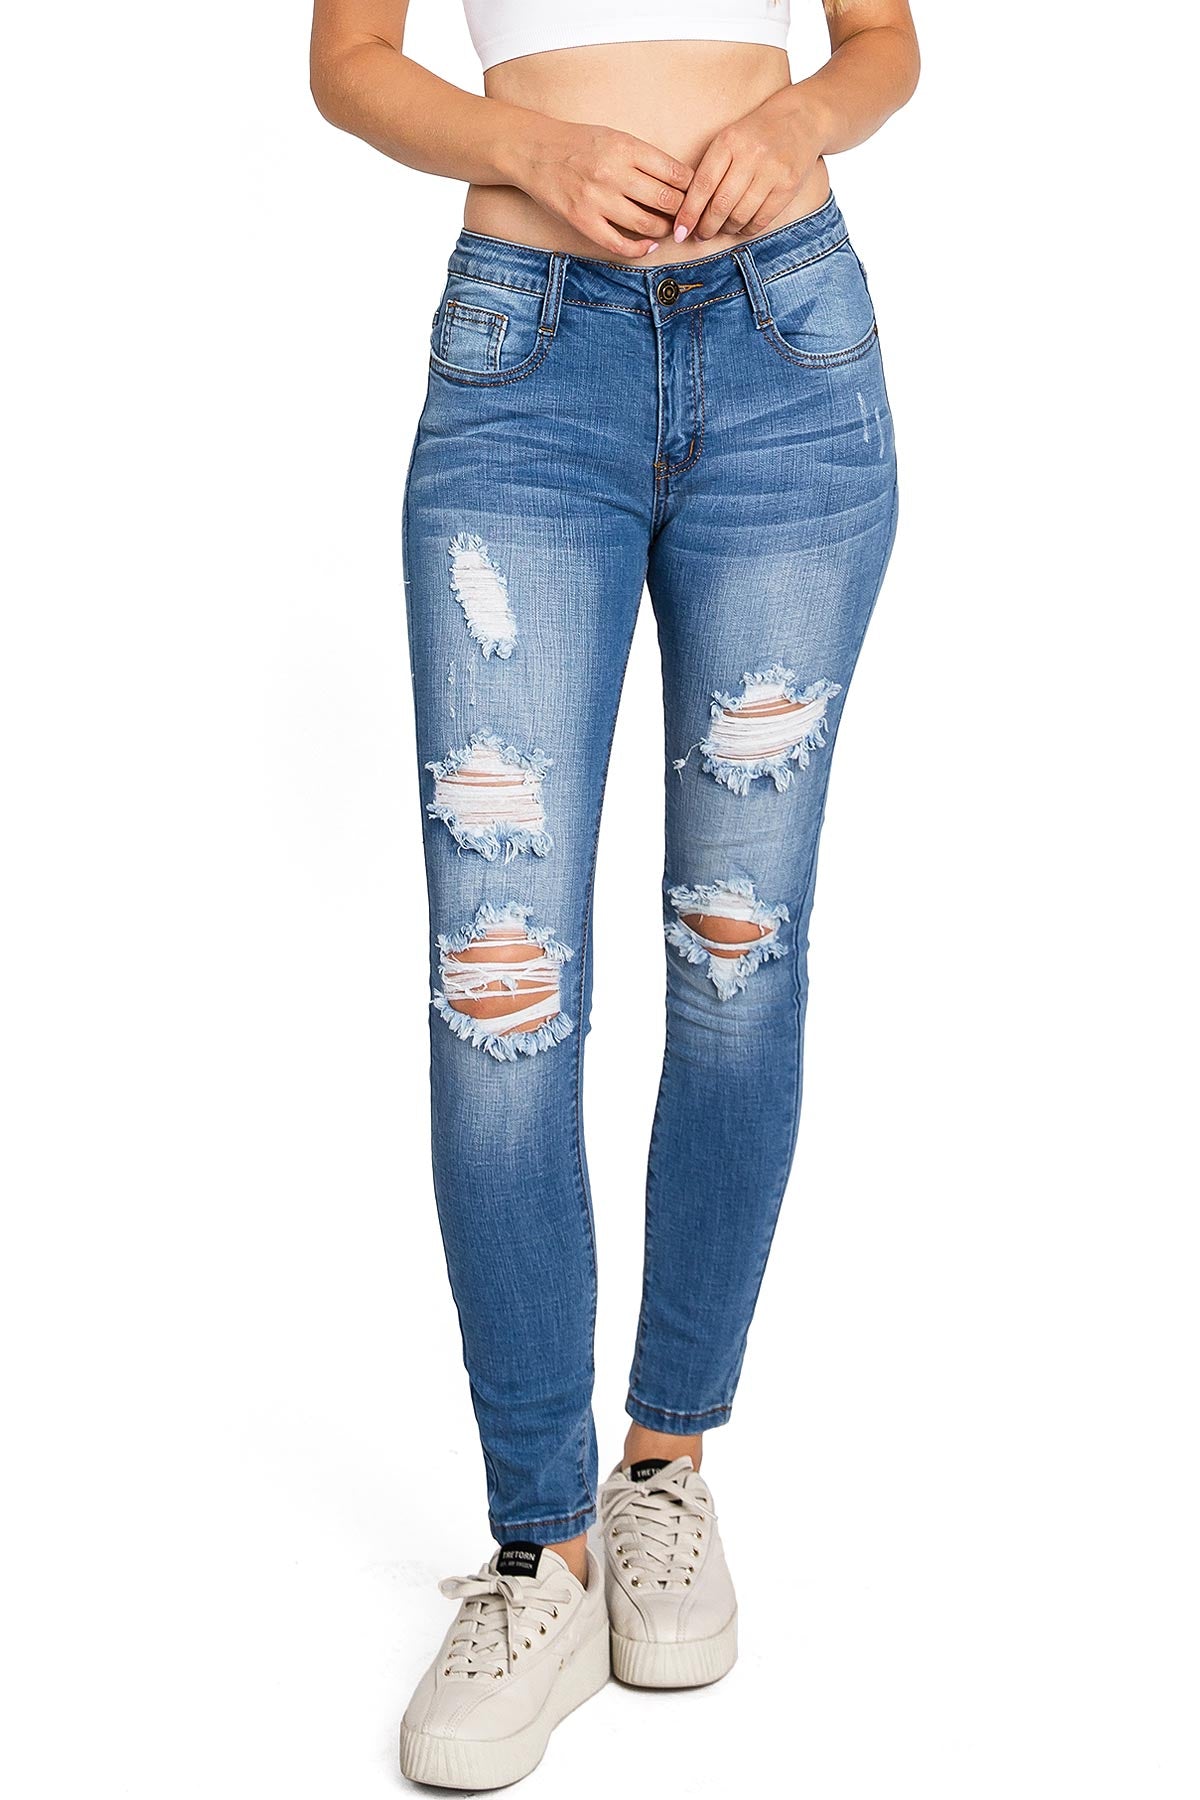 Lucky Brand Light Blue Distressed Skinny Denim Jeans sz 2 – Embrace Sisu